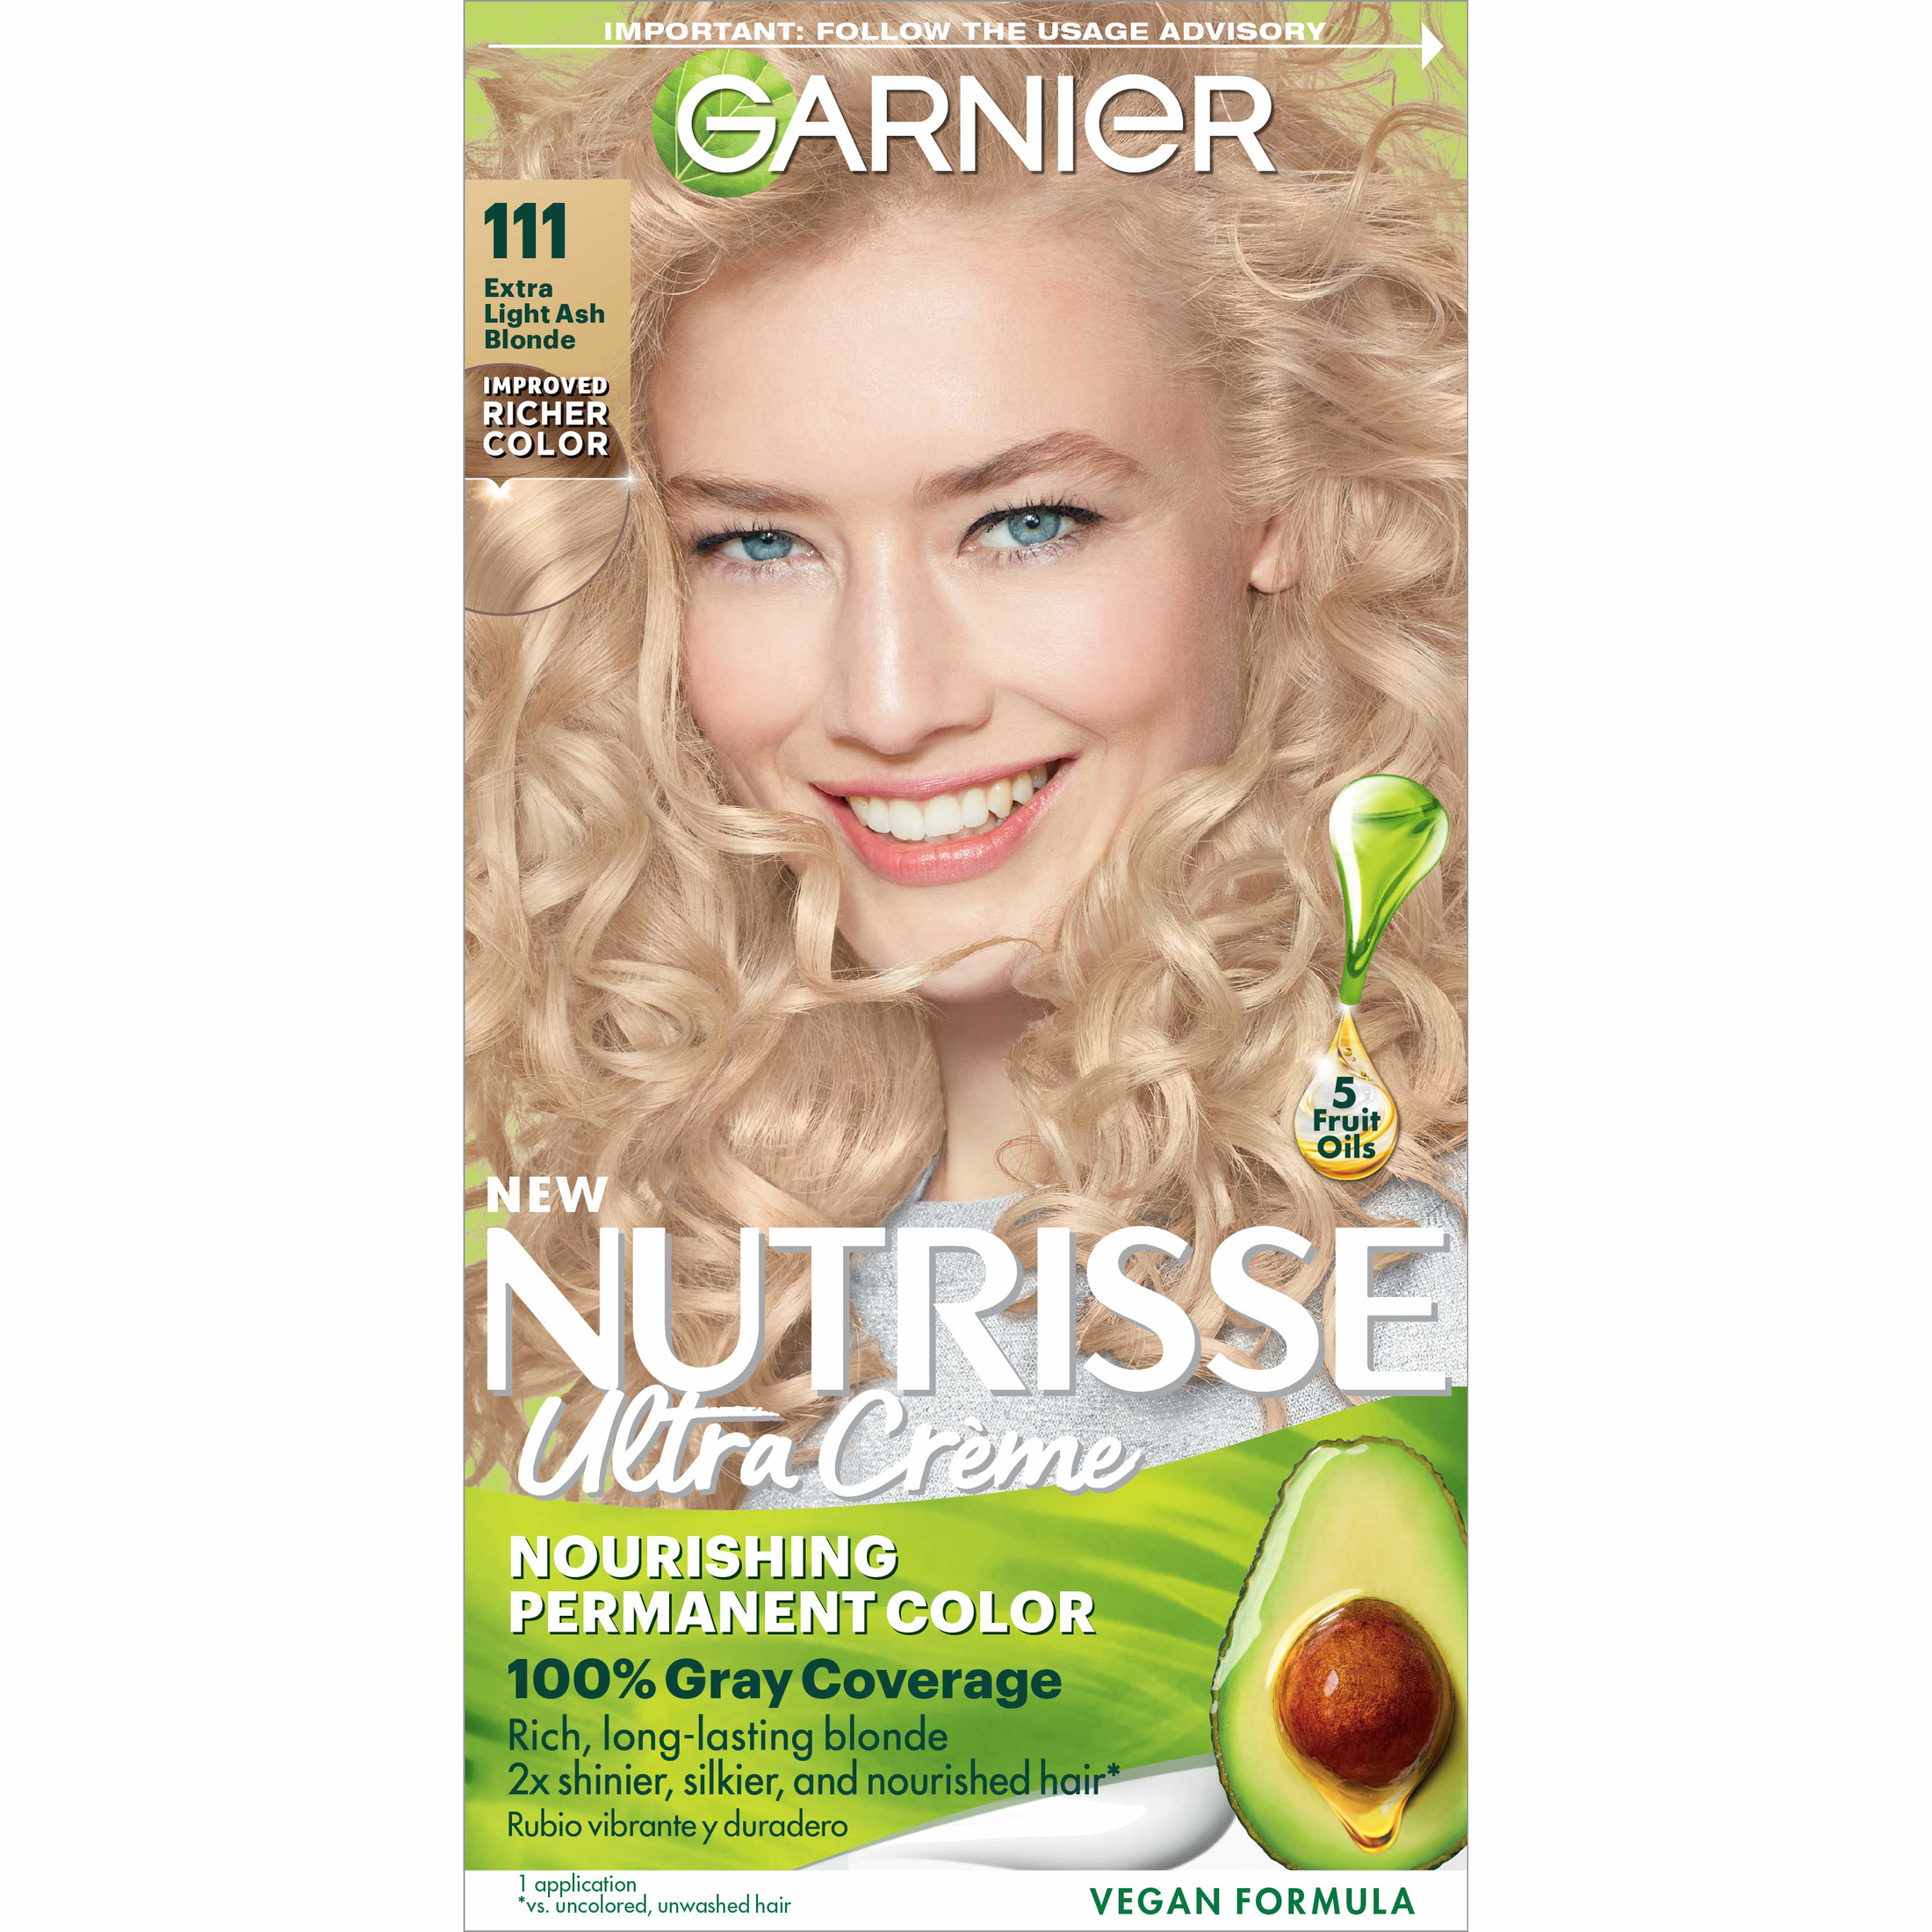 Garnier Nutrisse Nourishing Hair Color Creme, 111 Extra Light Ash Blonde - image 1 of 11